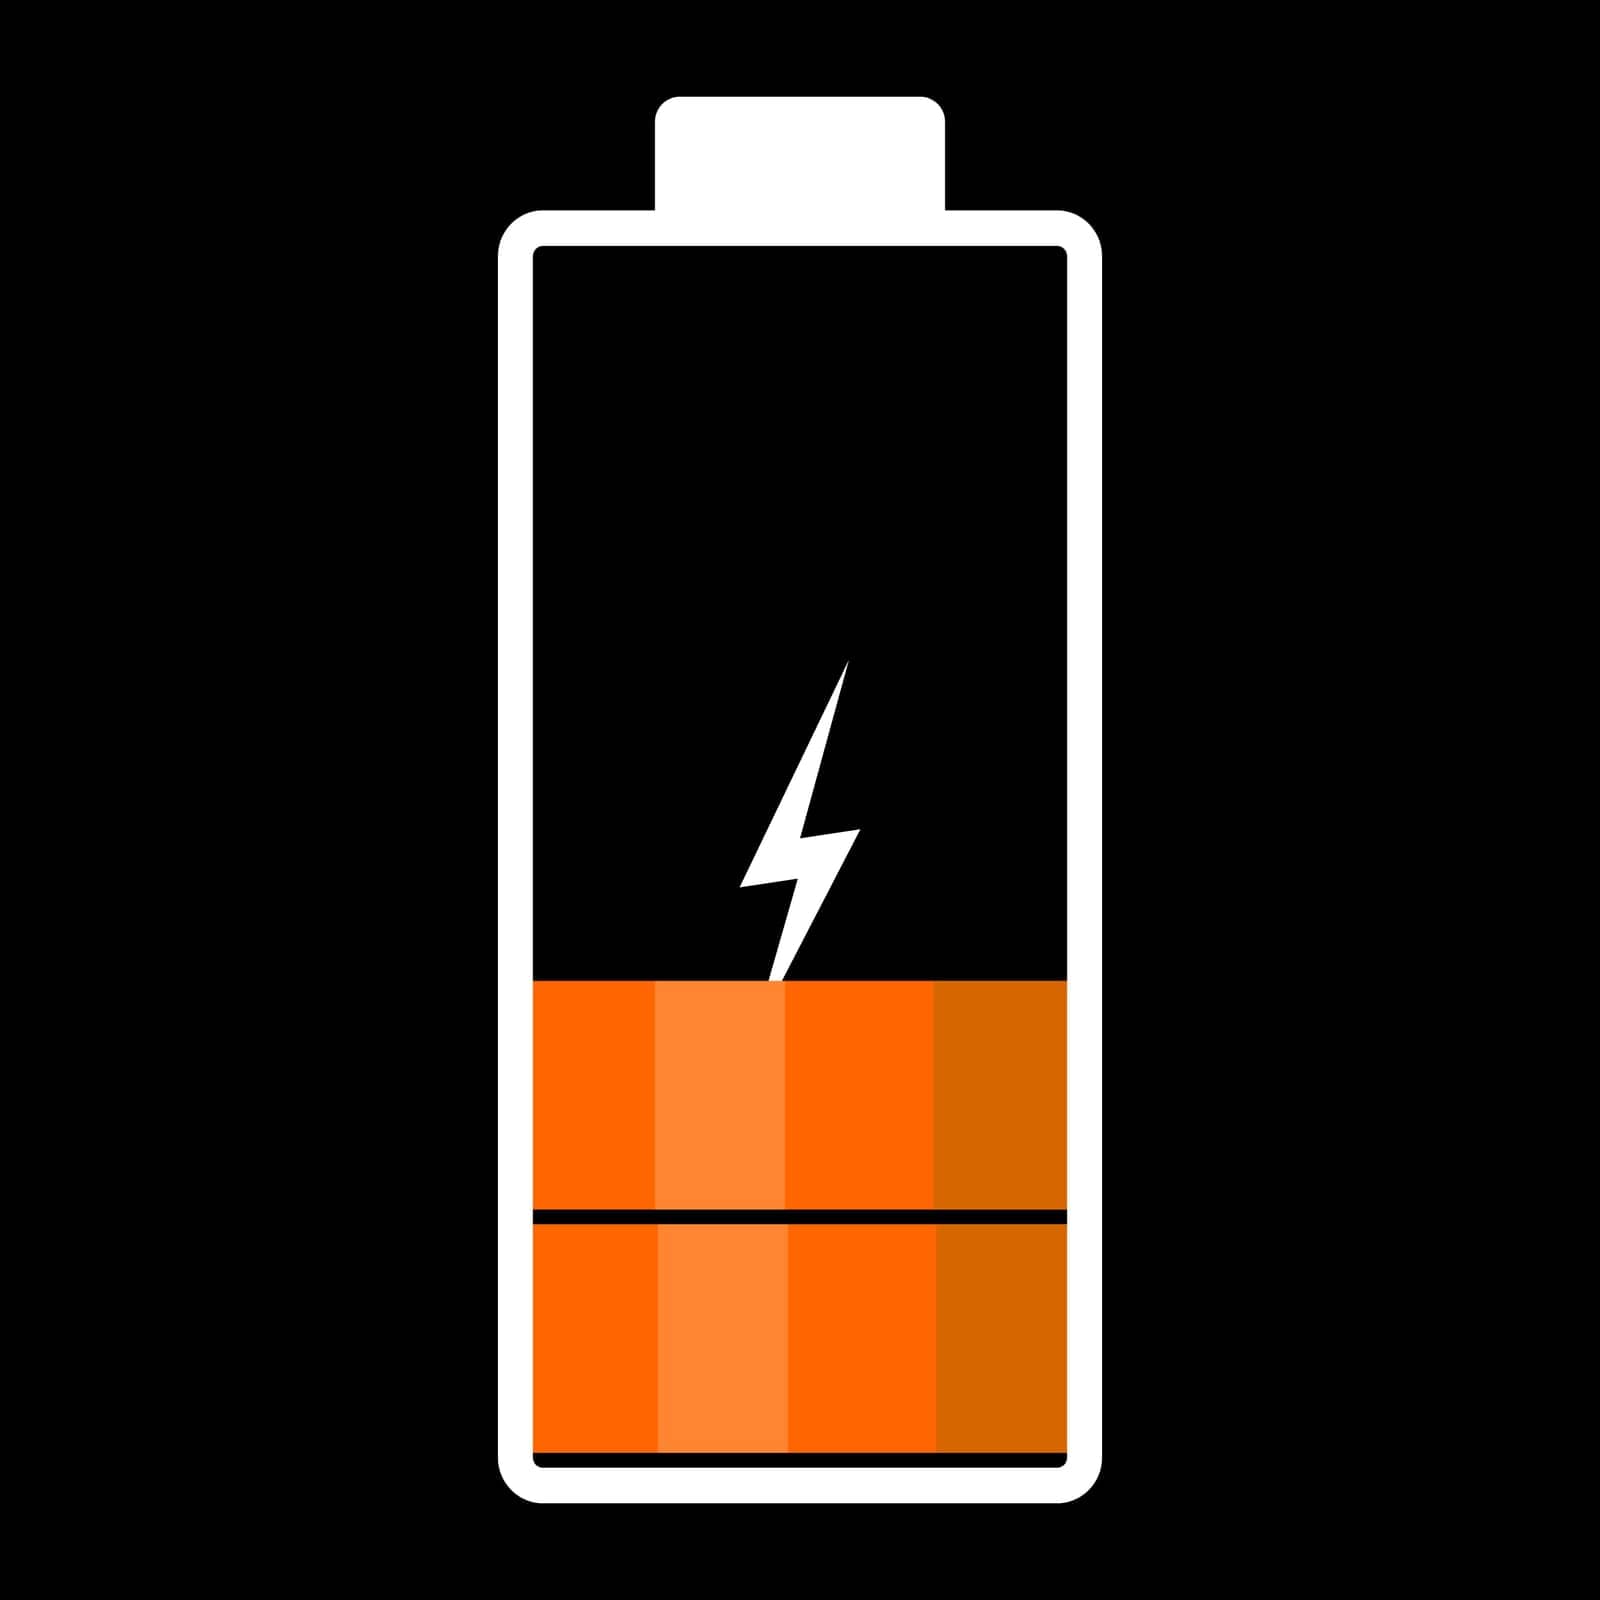 An illustration of a discharging battery. Orange color. Vector image.